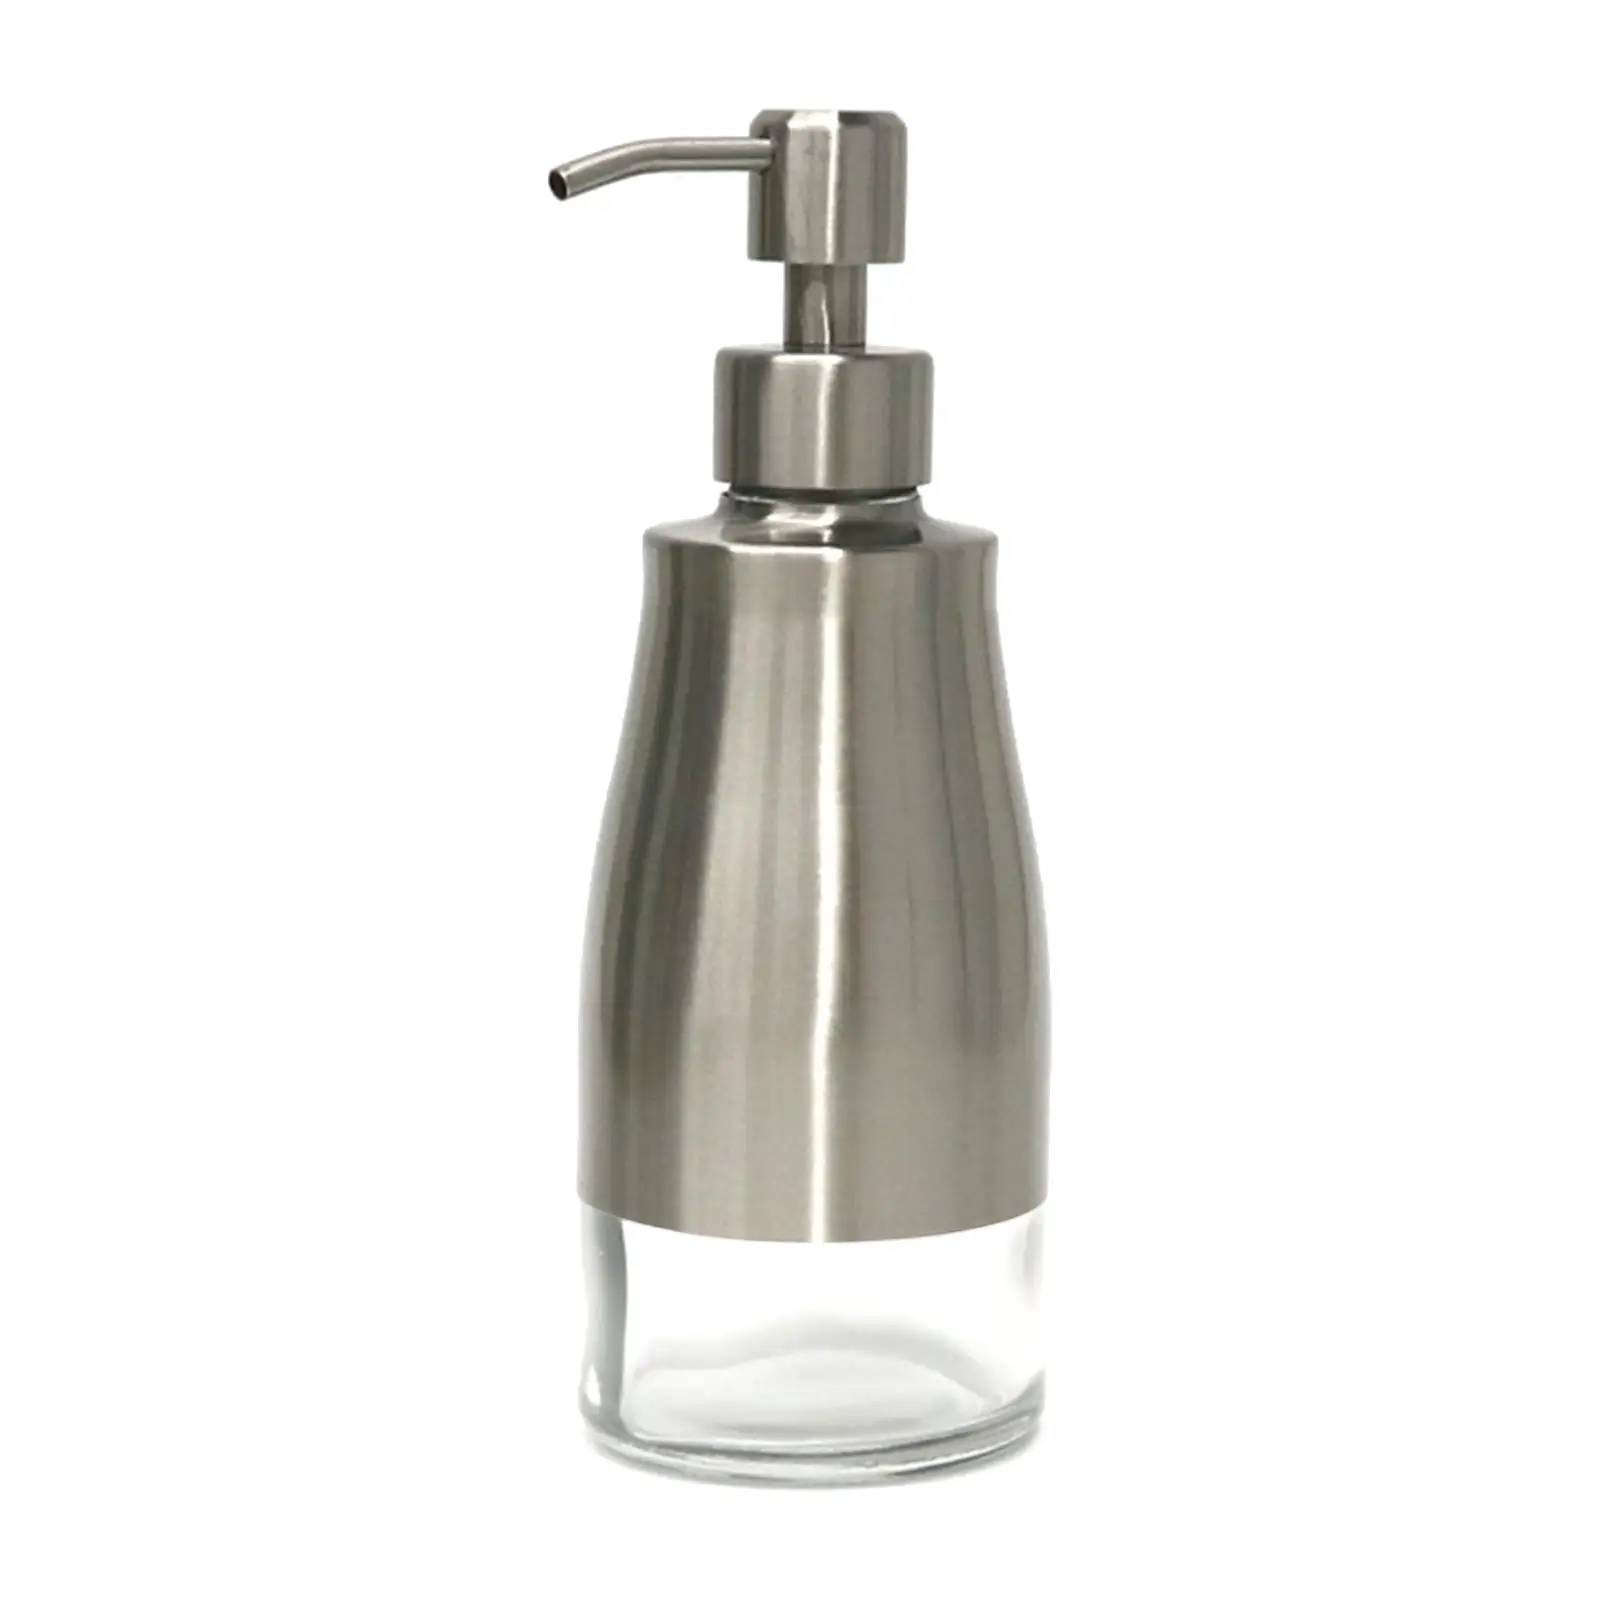 Countertop Lotion Dispenser Soap Dispenser for Body Wash Lotion Mouthwash